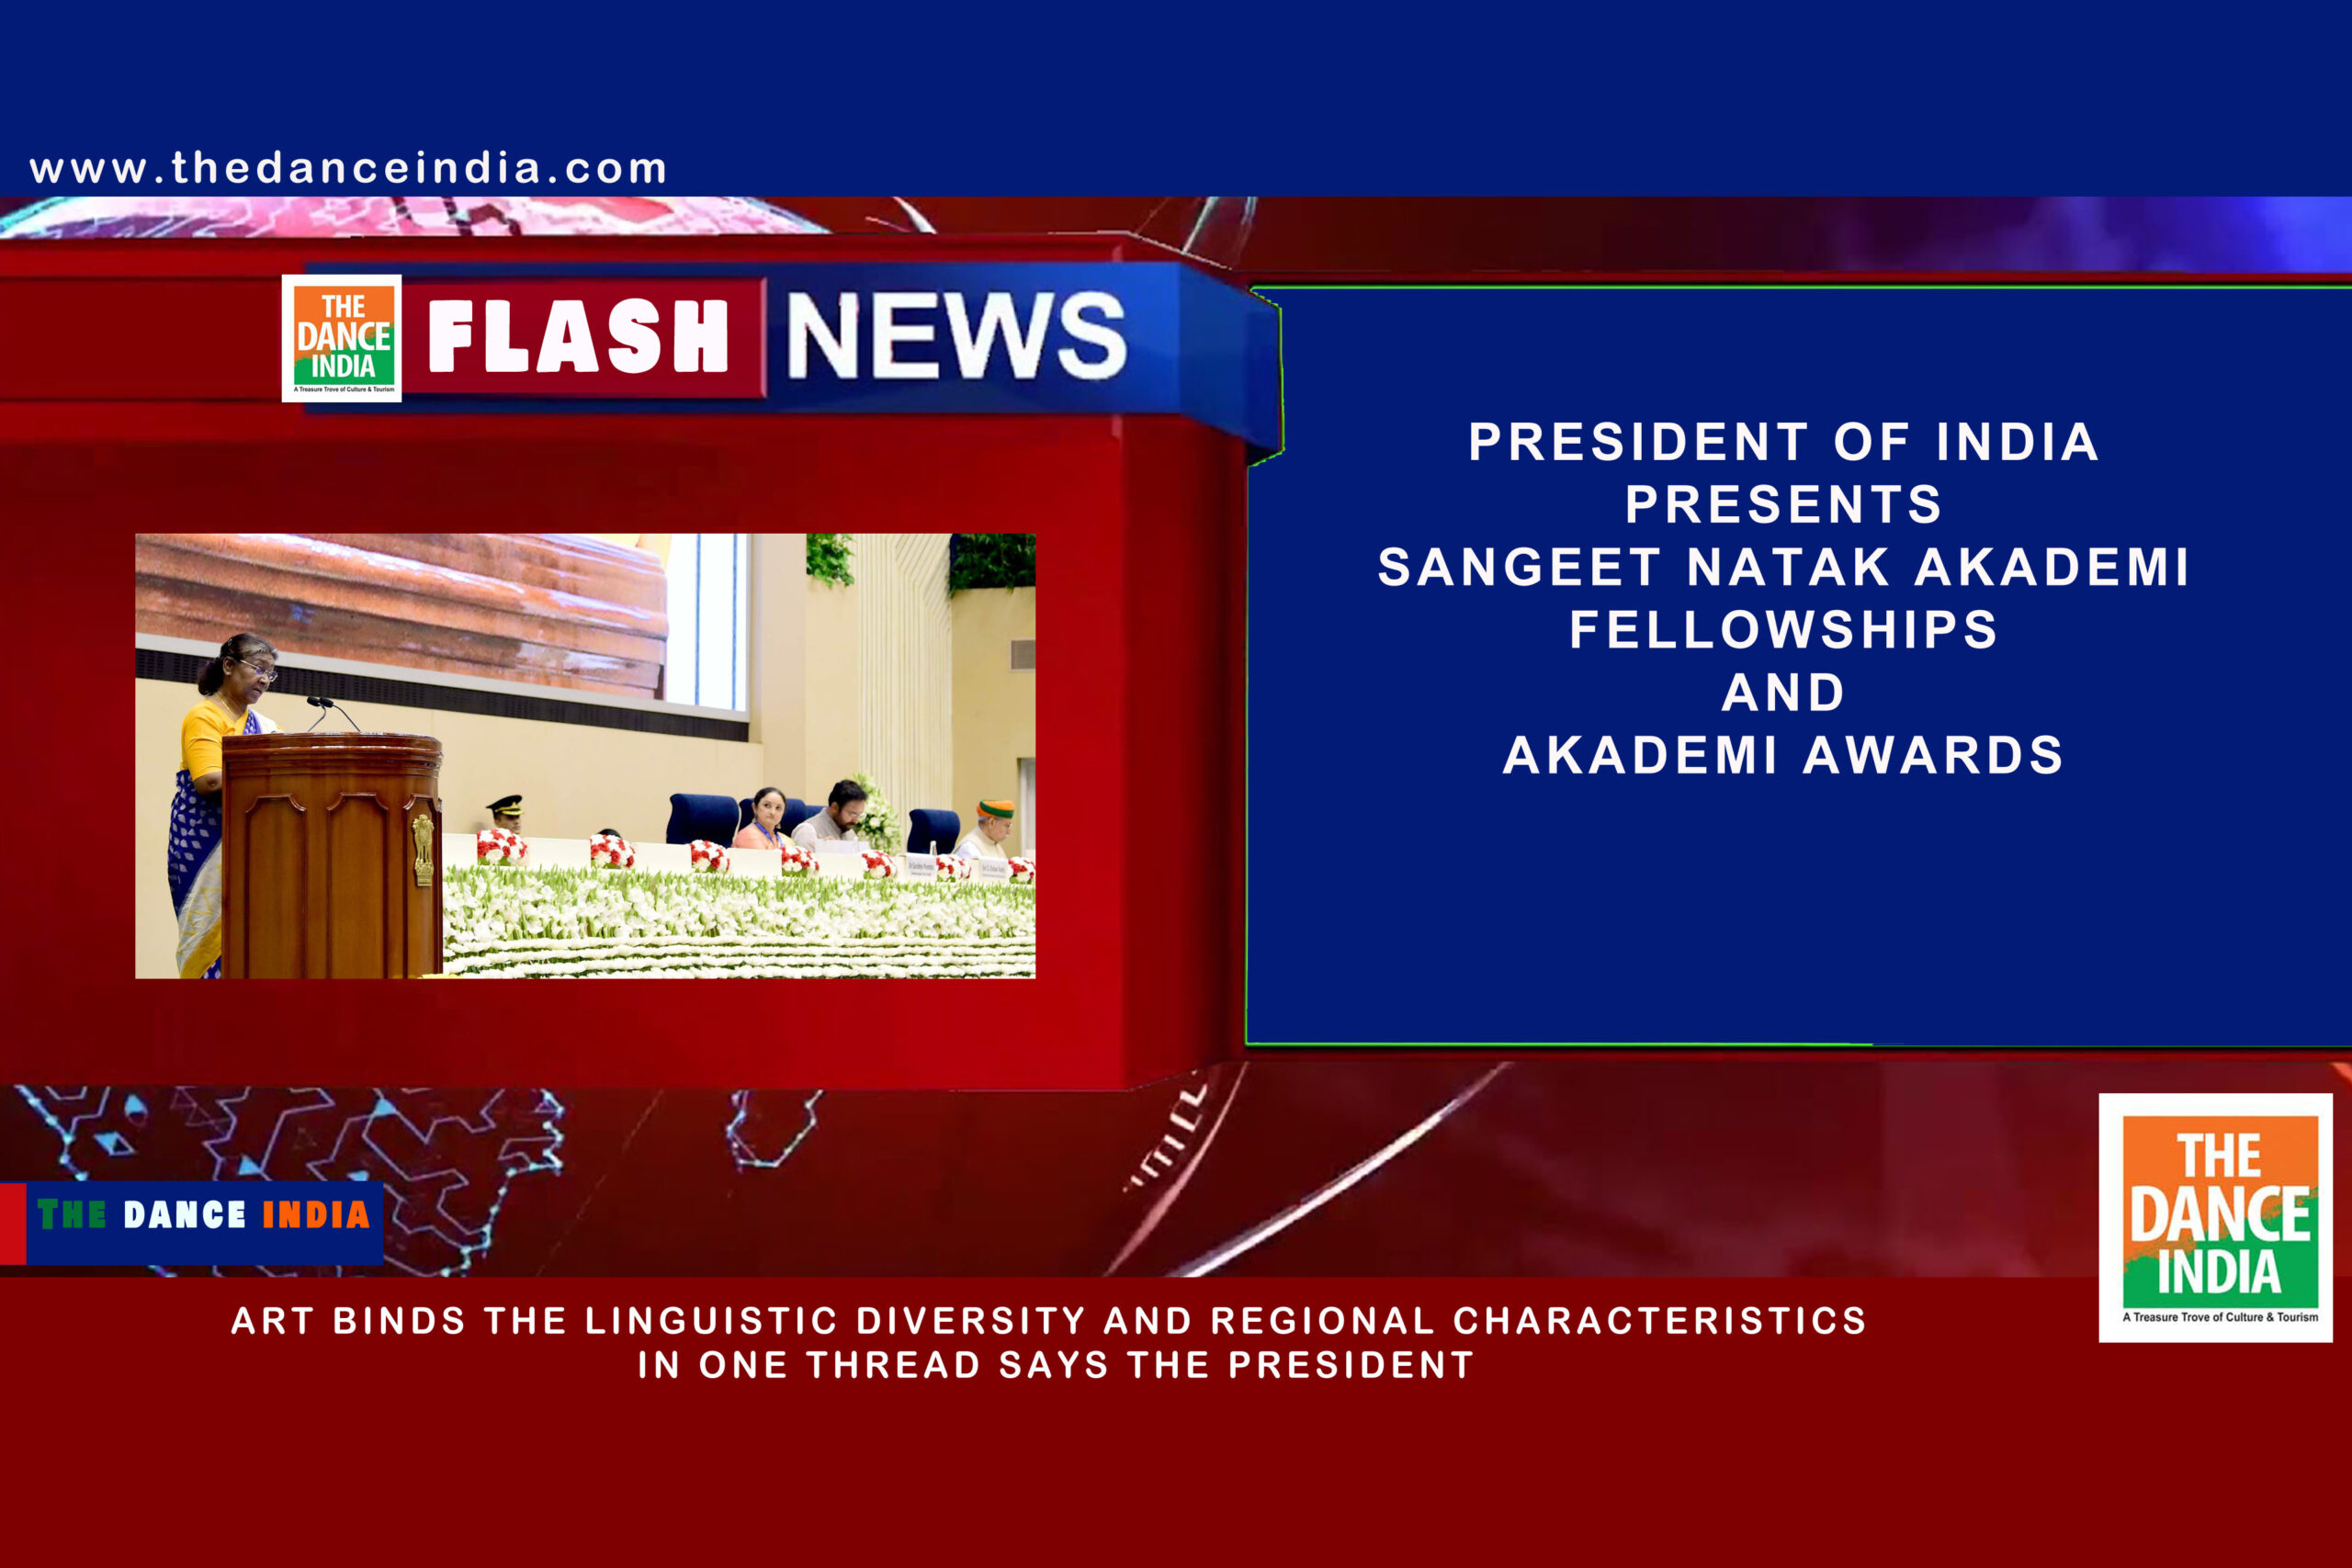 PRESIDENT OF INDIA PRESENTS SANGEET NATAK AKADEMI FELLOWSHIPS AND AKADEMI AWARDS